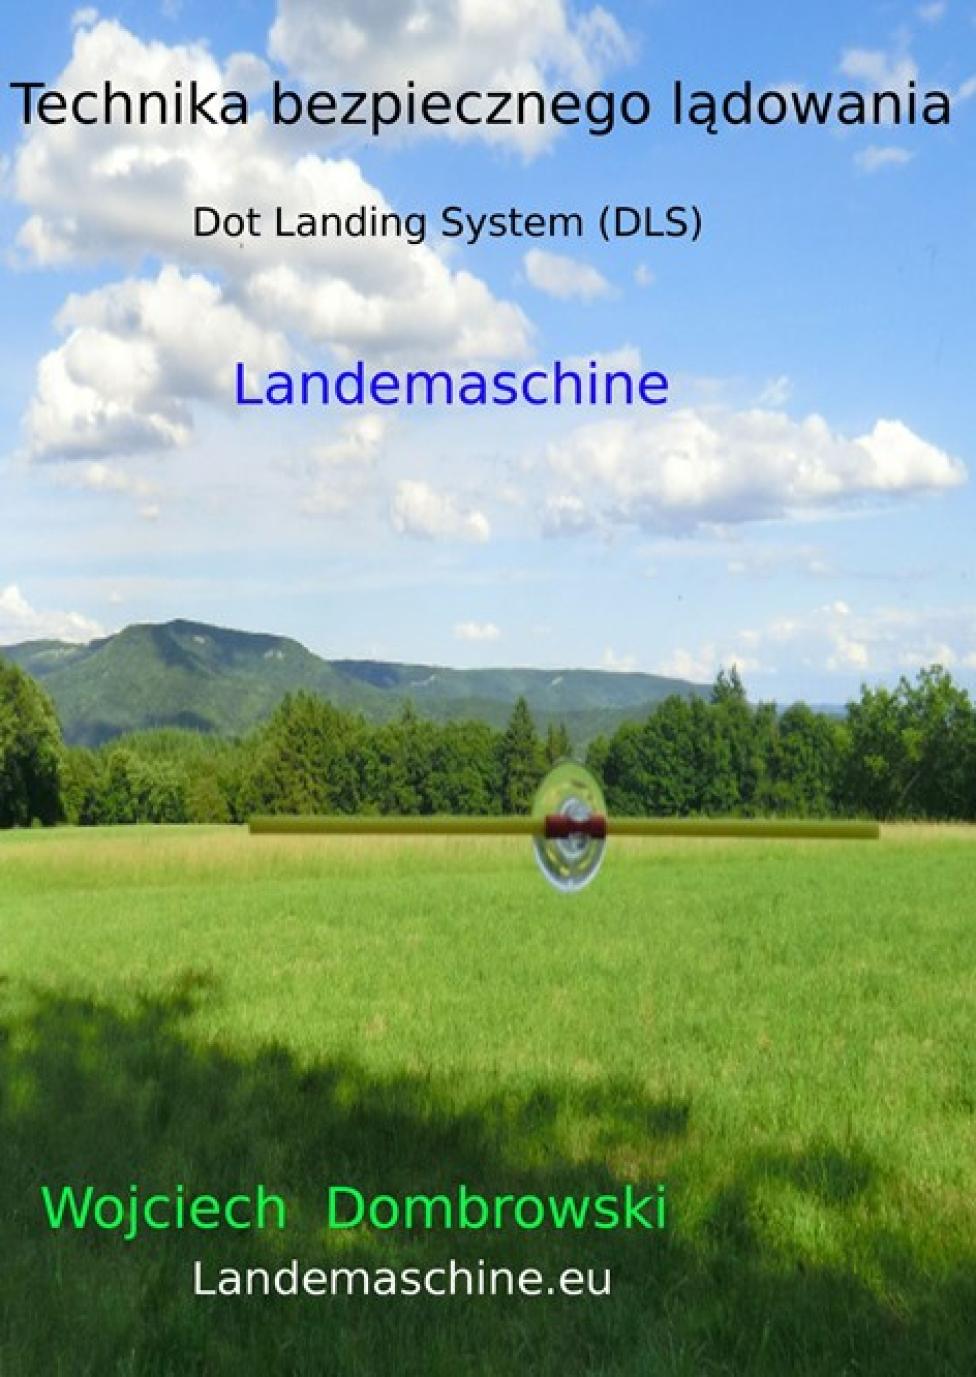 E-book "Technika bezpiecznego lądowania. Dot Landing System DLS" (fot. e-bookowo.pl)